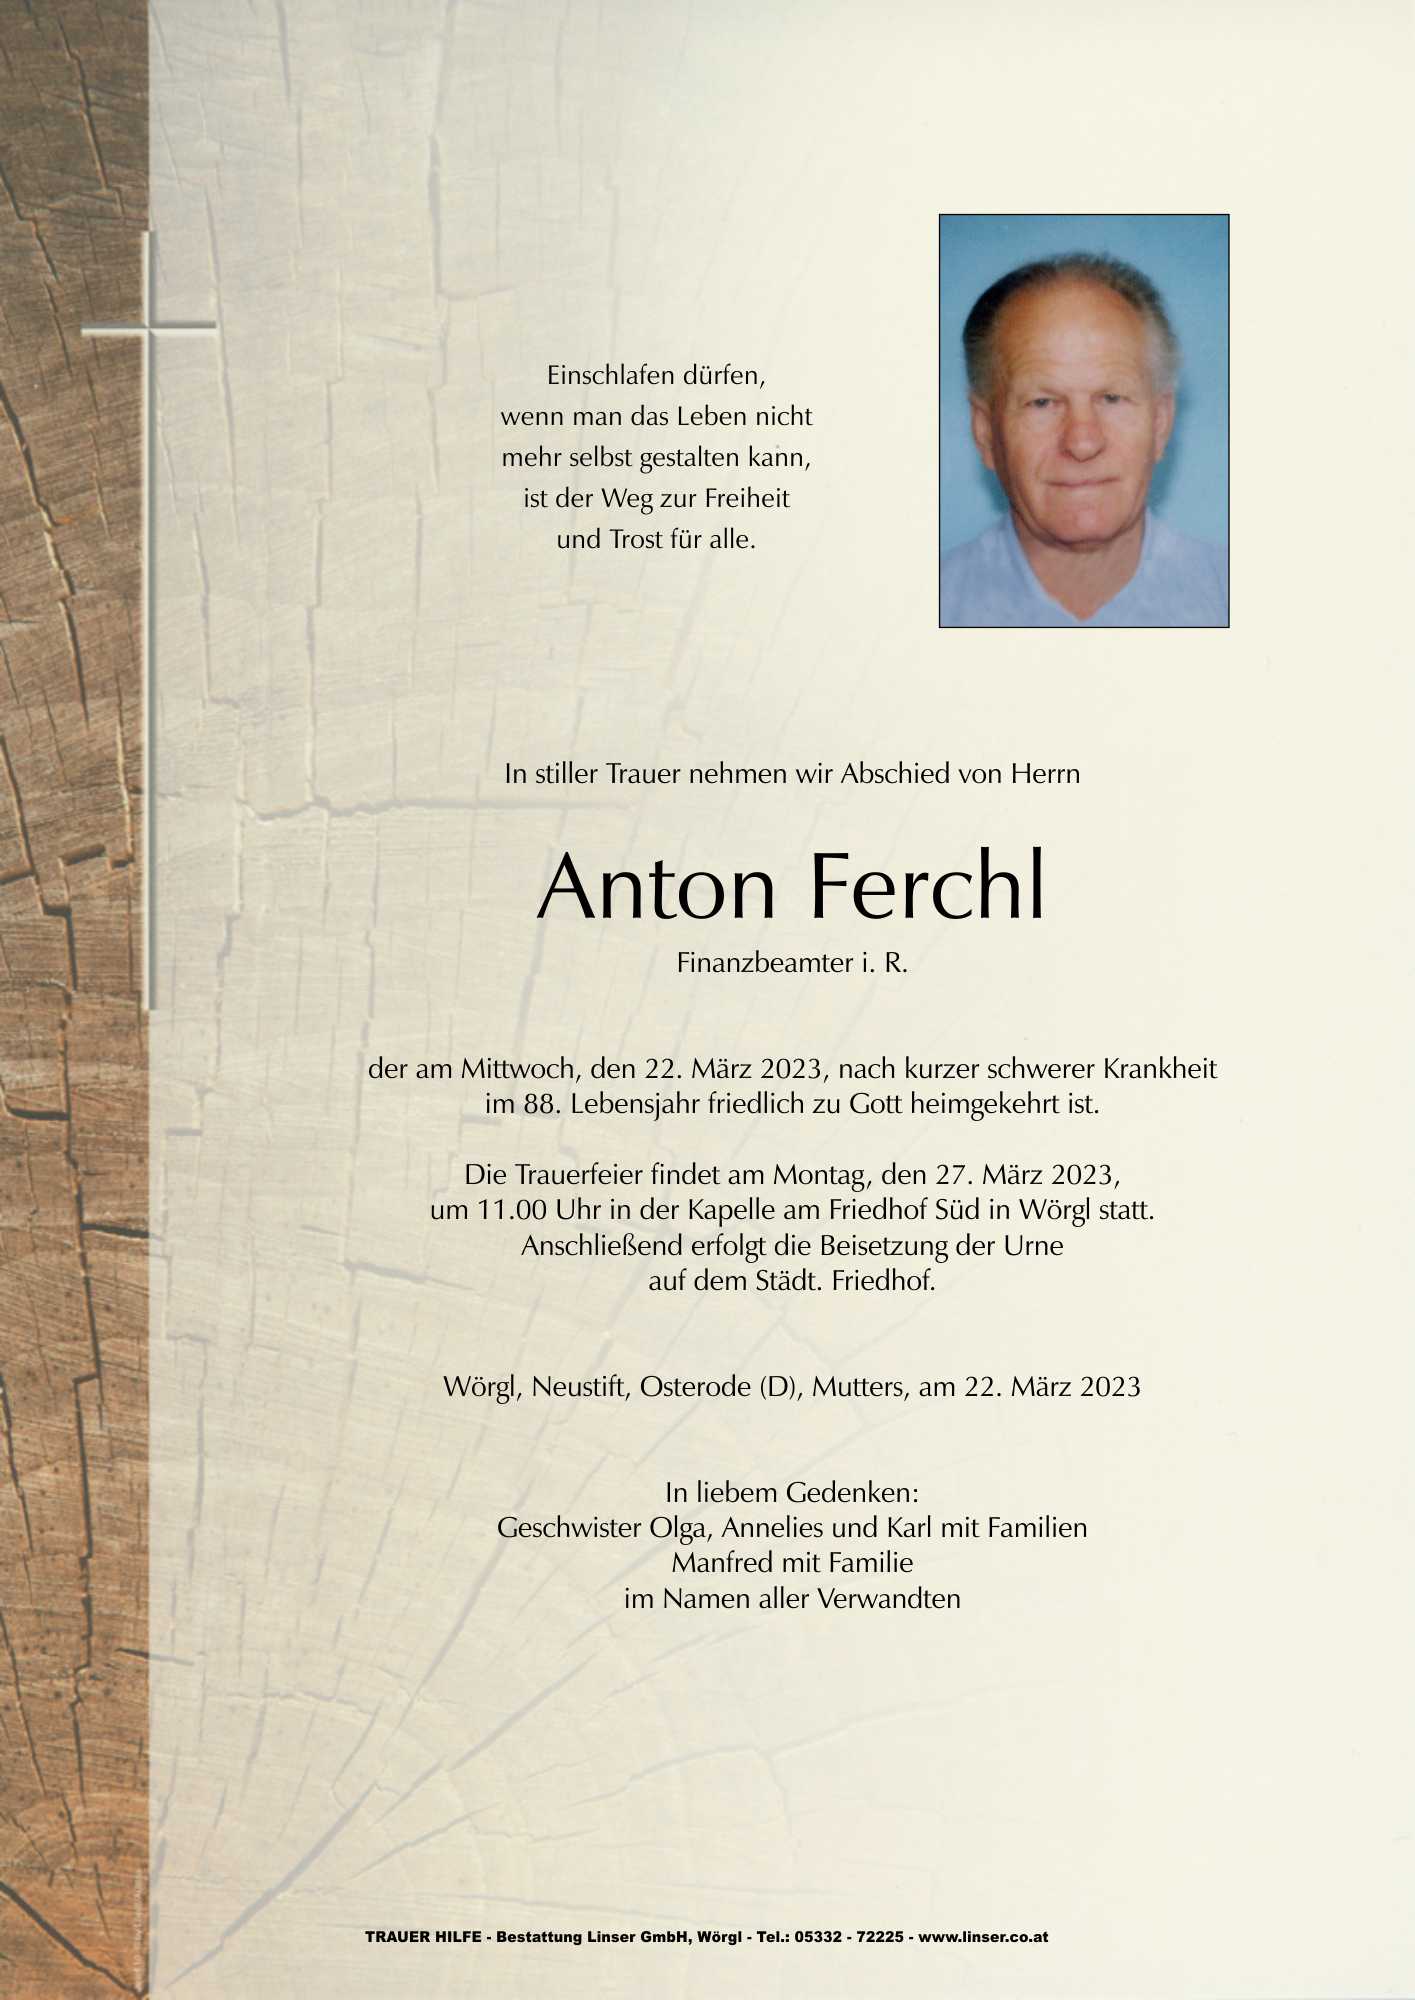 Anton Ferchl